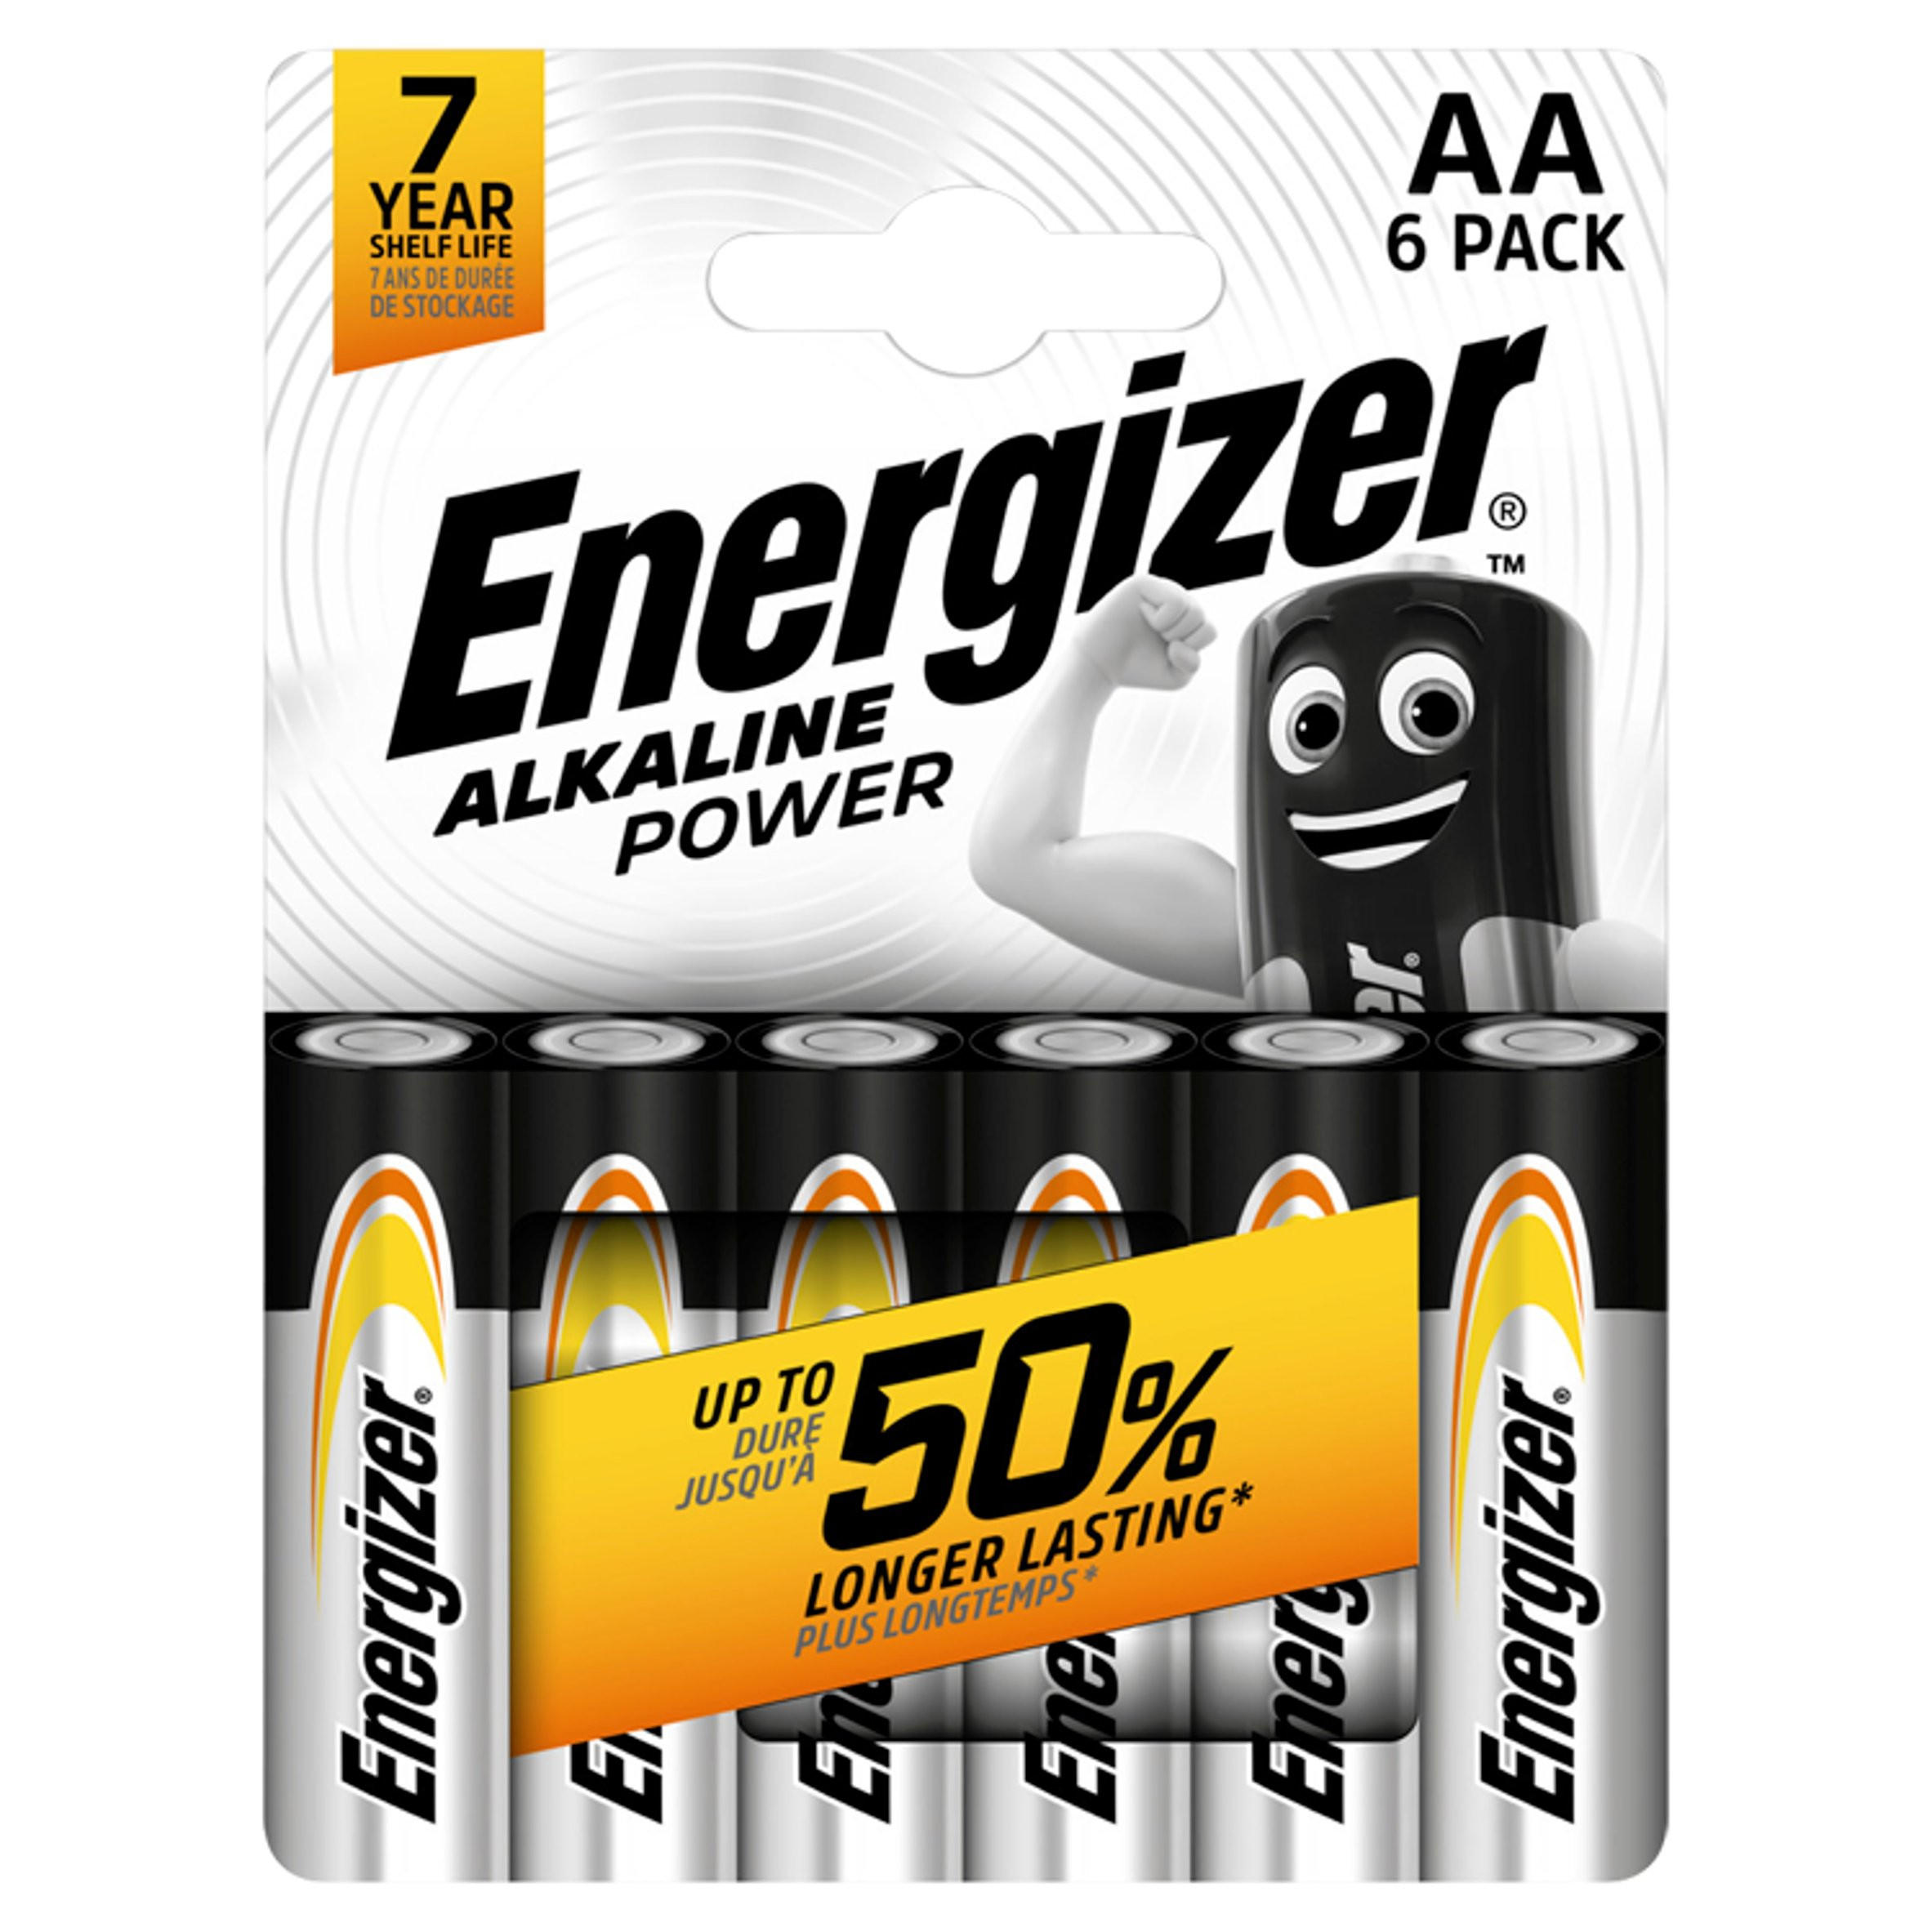 Energizer Alkaline Power AA Batteries, 6 Pack